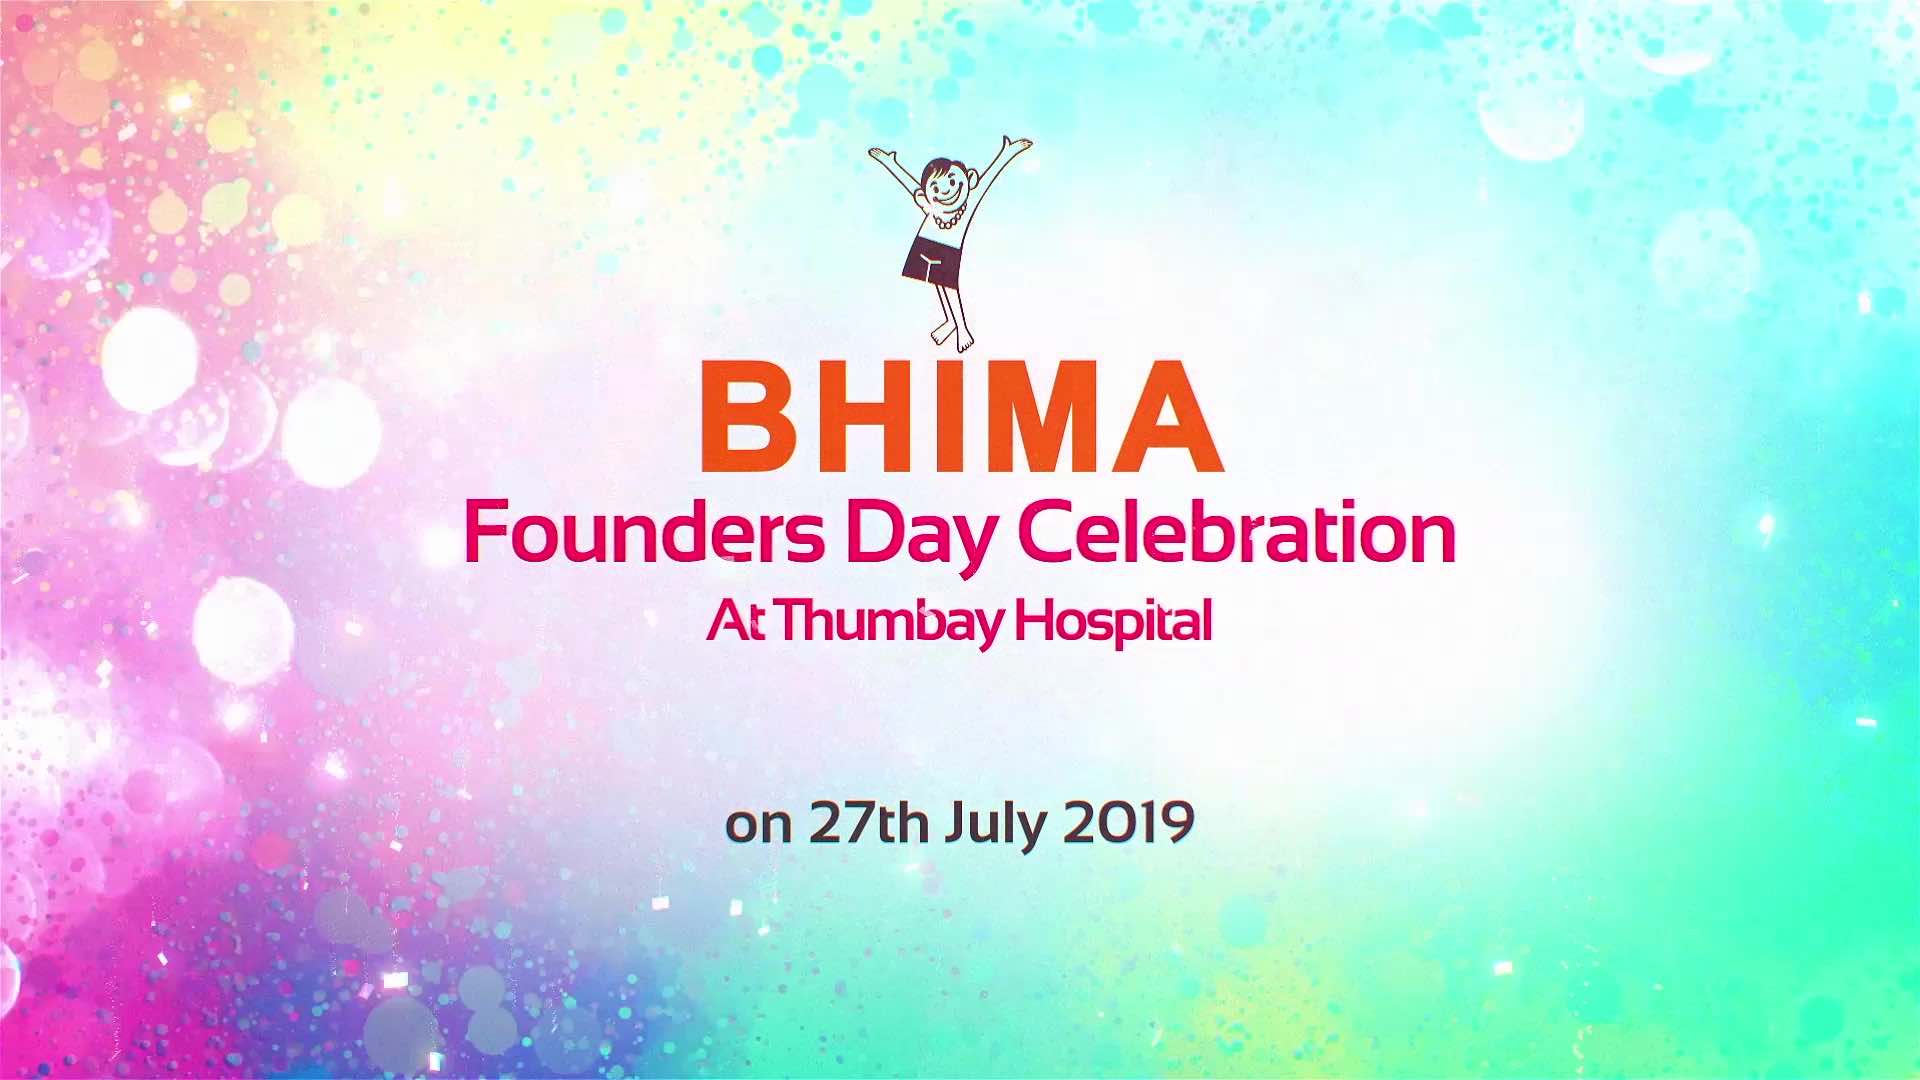 Bhima Founder's Day Celebration 2019 at Thumbay Hospital